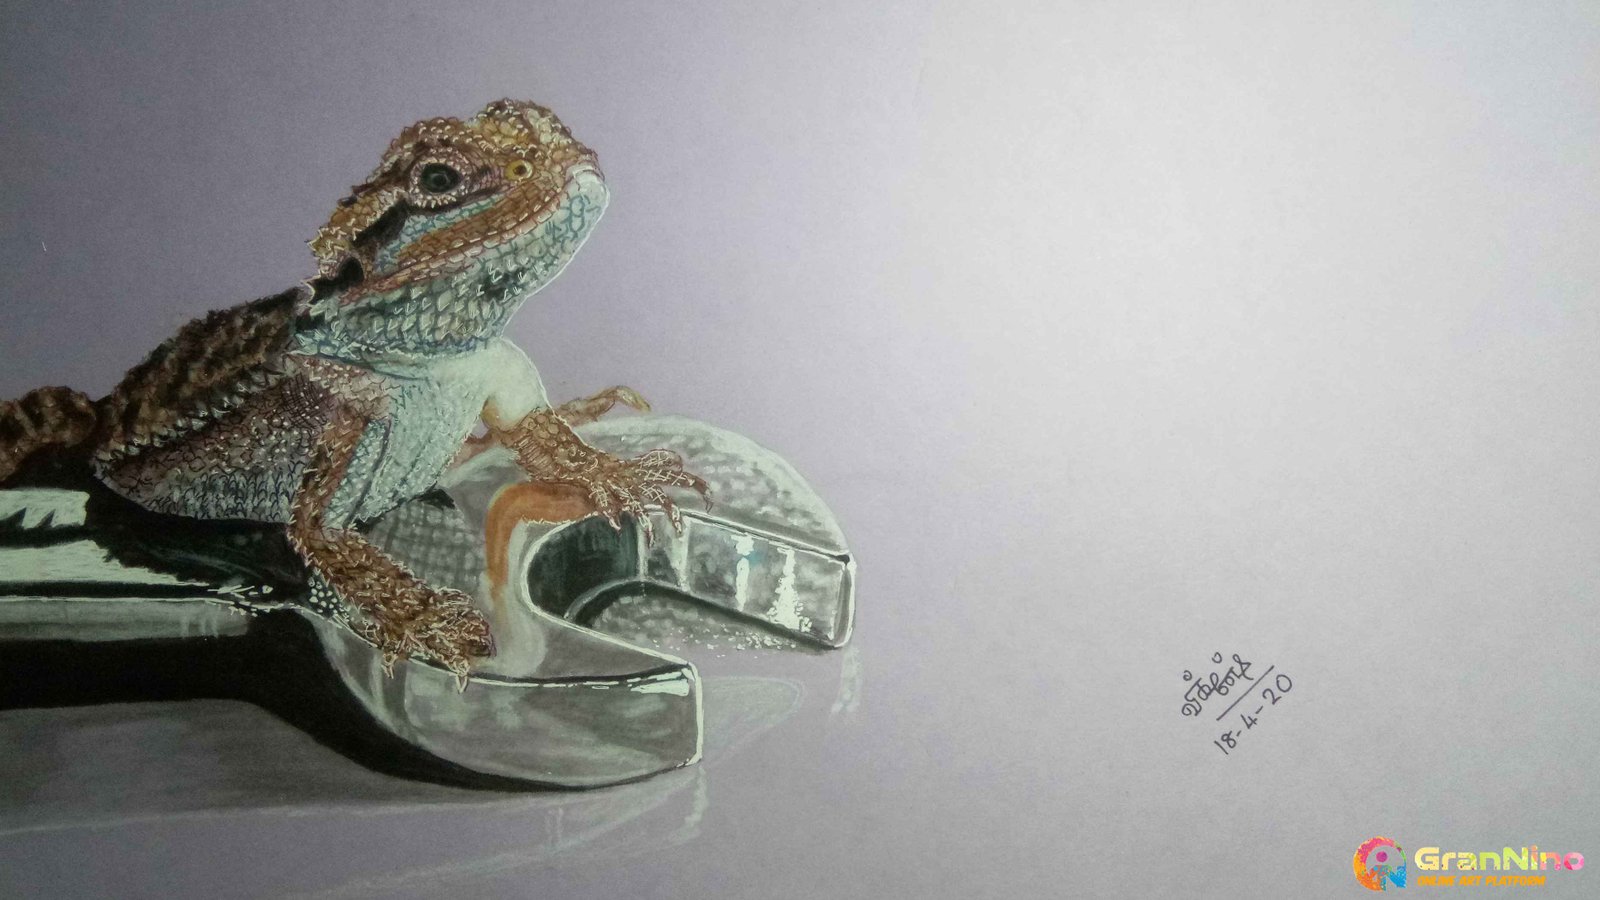 realistic lizard drawing